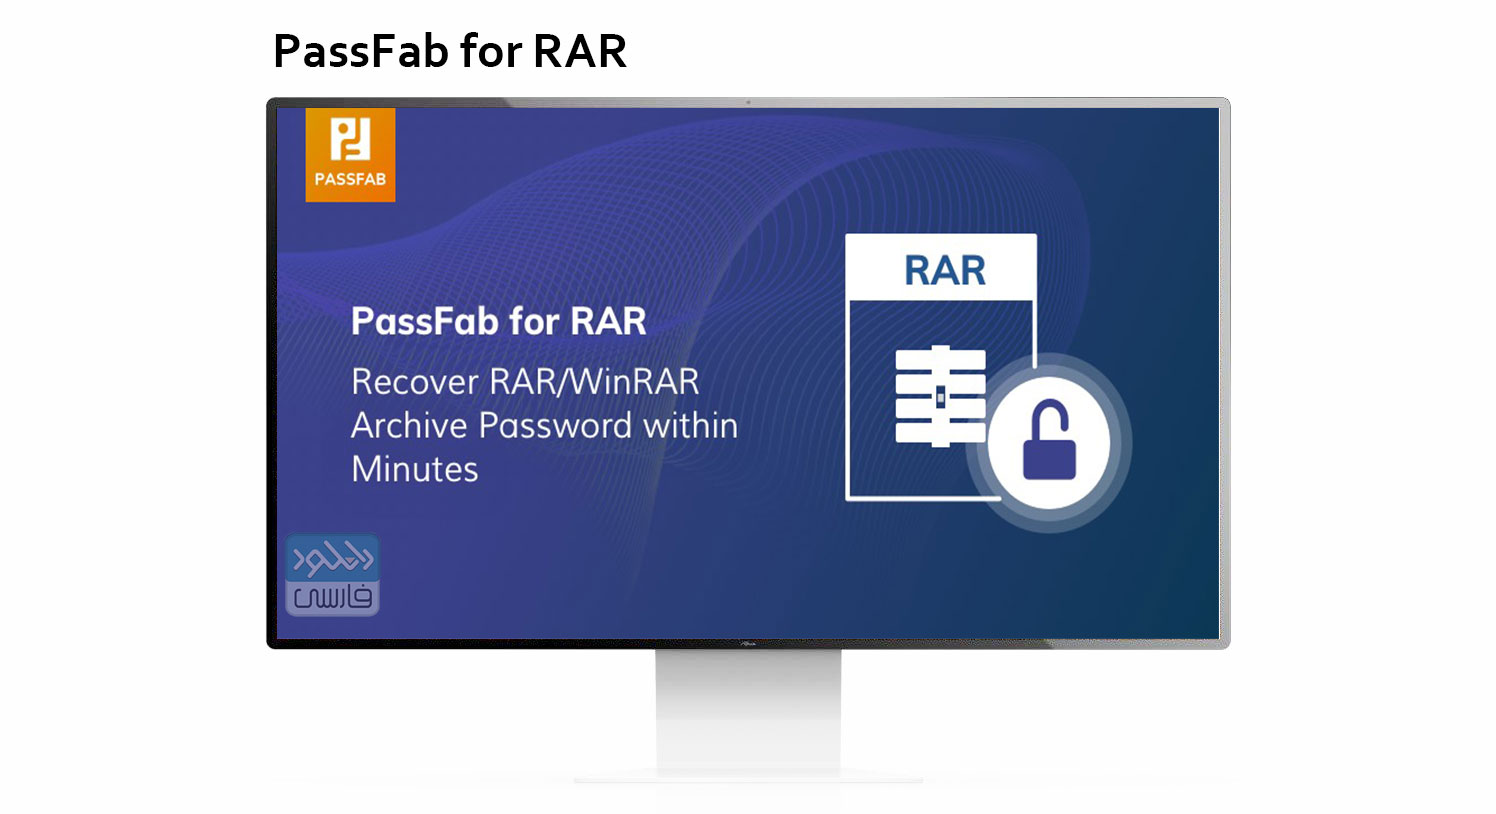 passfab for rar portable